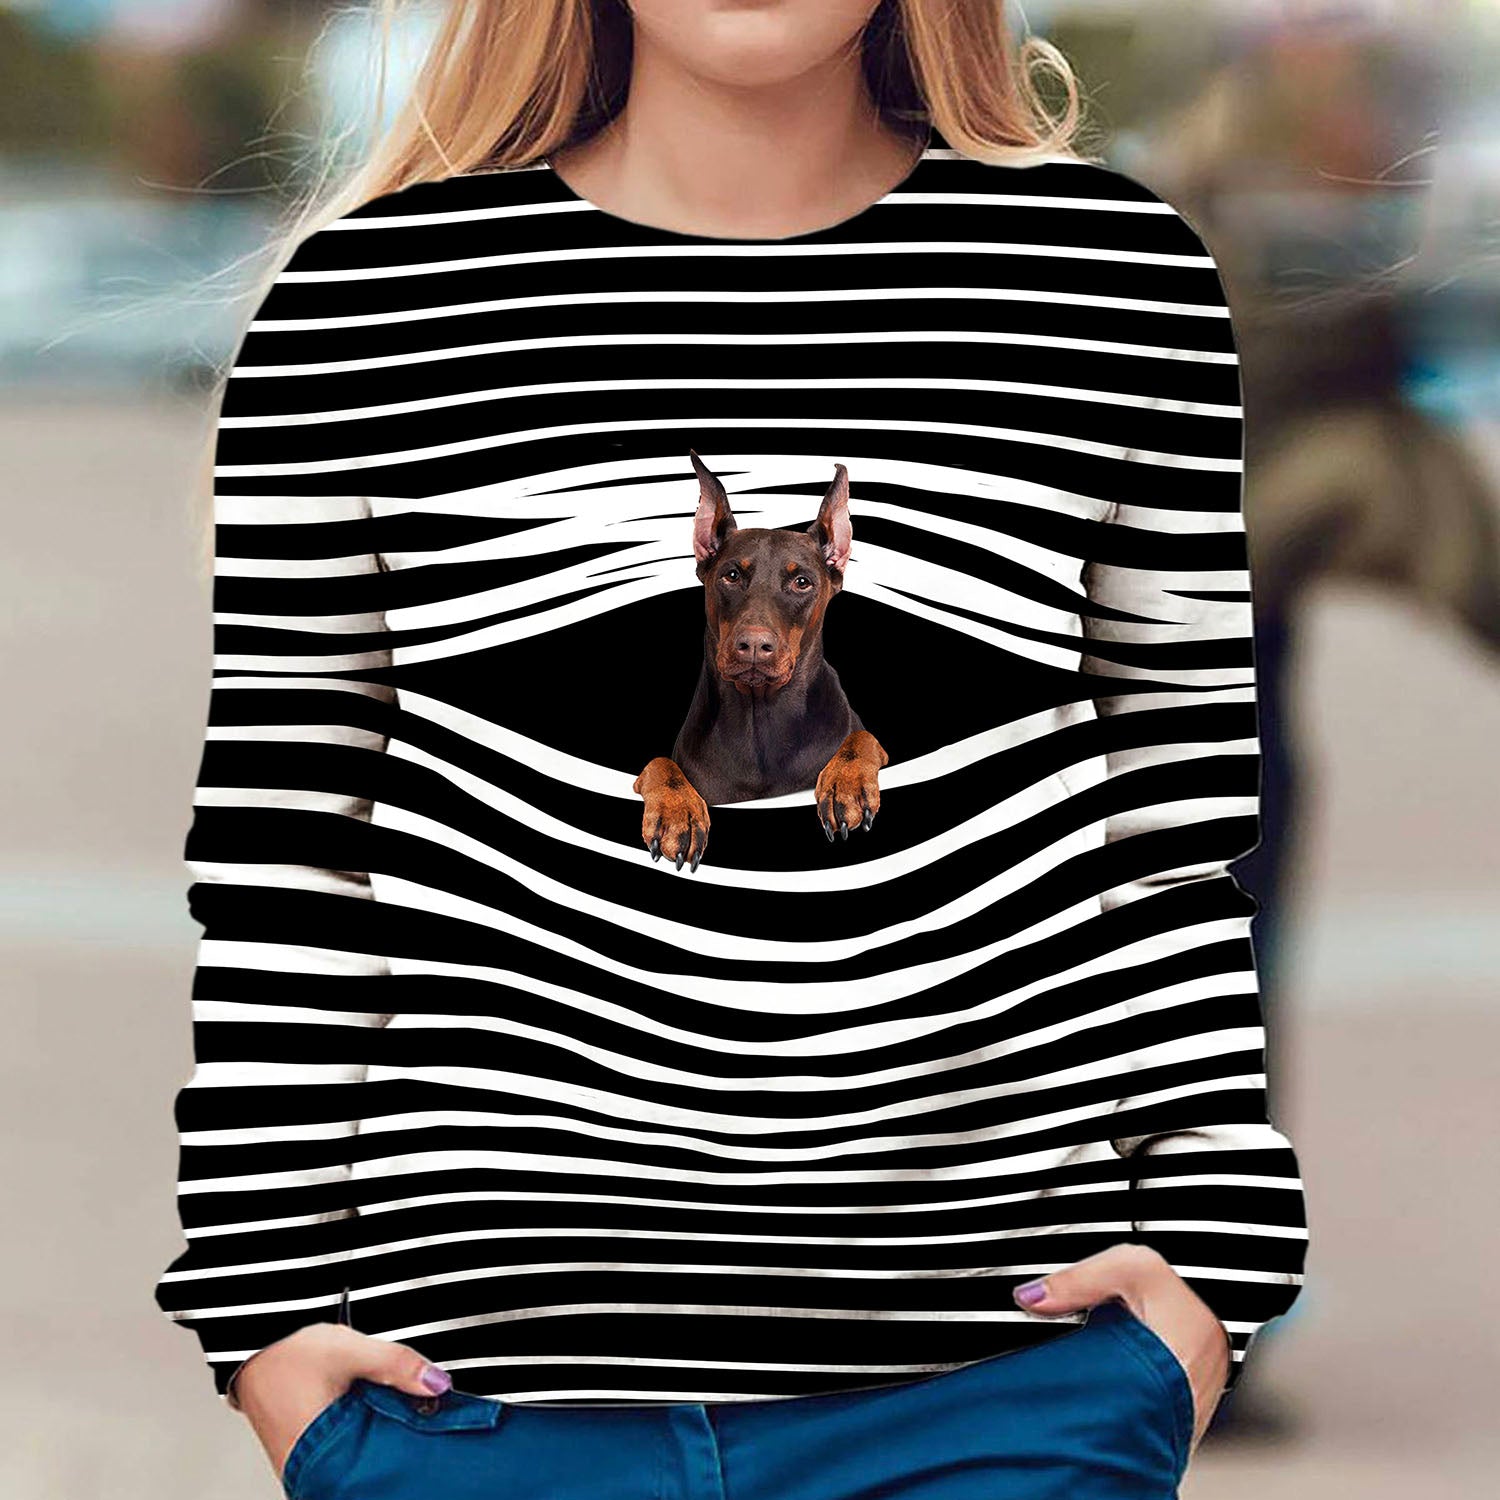 Doberman - Stripe - Premium Sweater